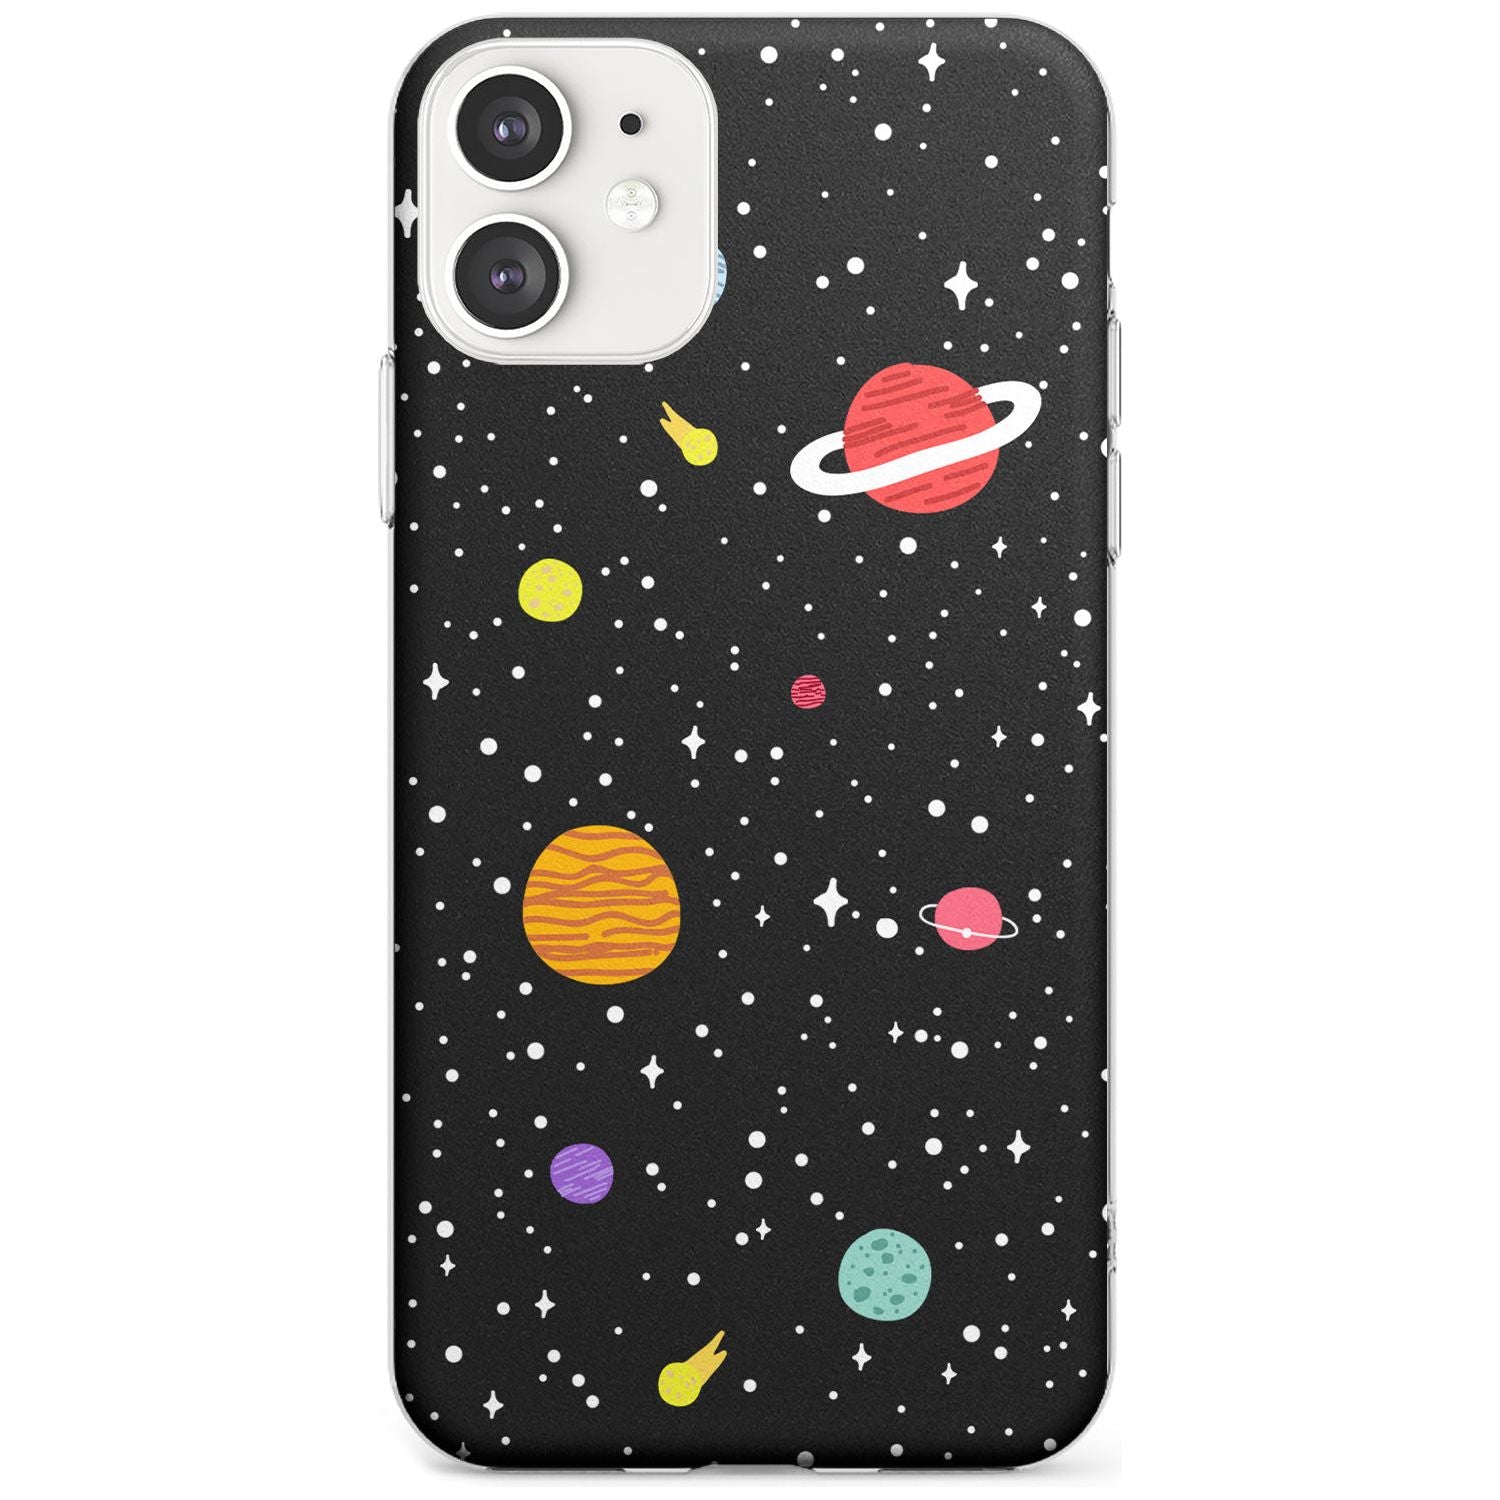 Cute Cartoon Planets Slim TPU Phone Case for iPhone 11